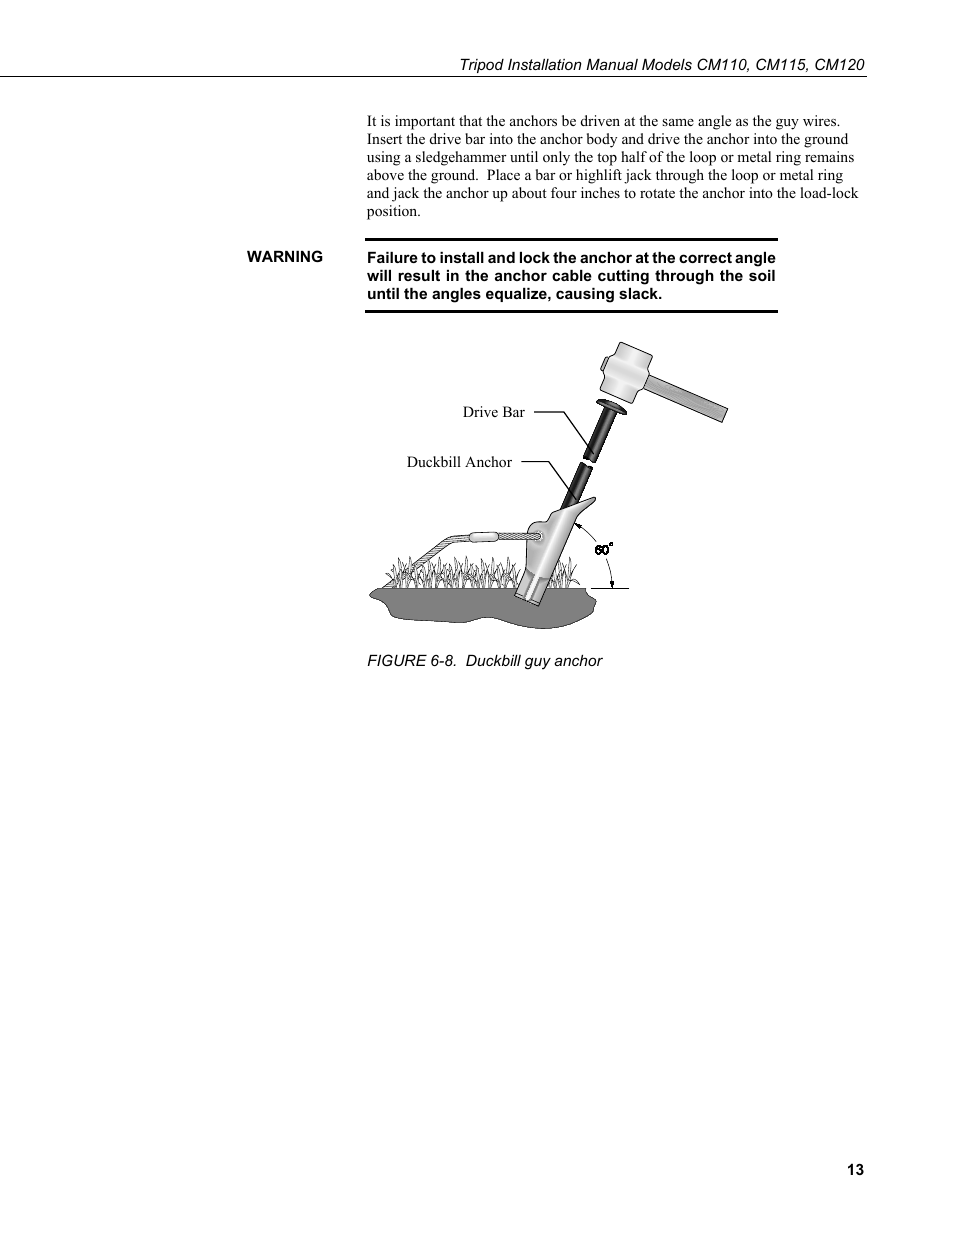 8. duckbill guy anchor | Campbell Scientific CM110, CM115, CM120 Tripod Installation User Manual | Page 21 / 40